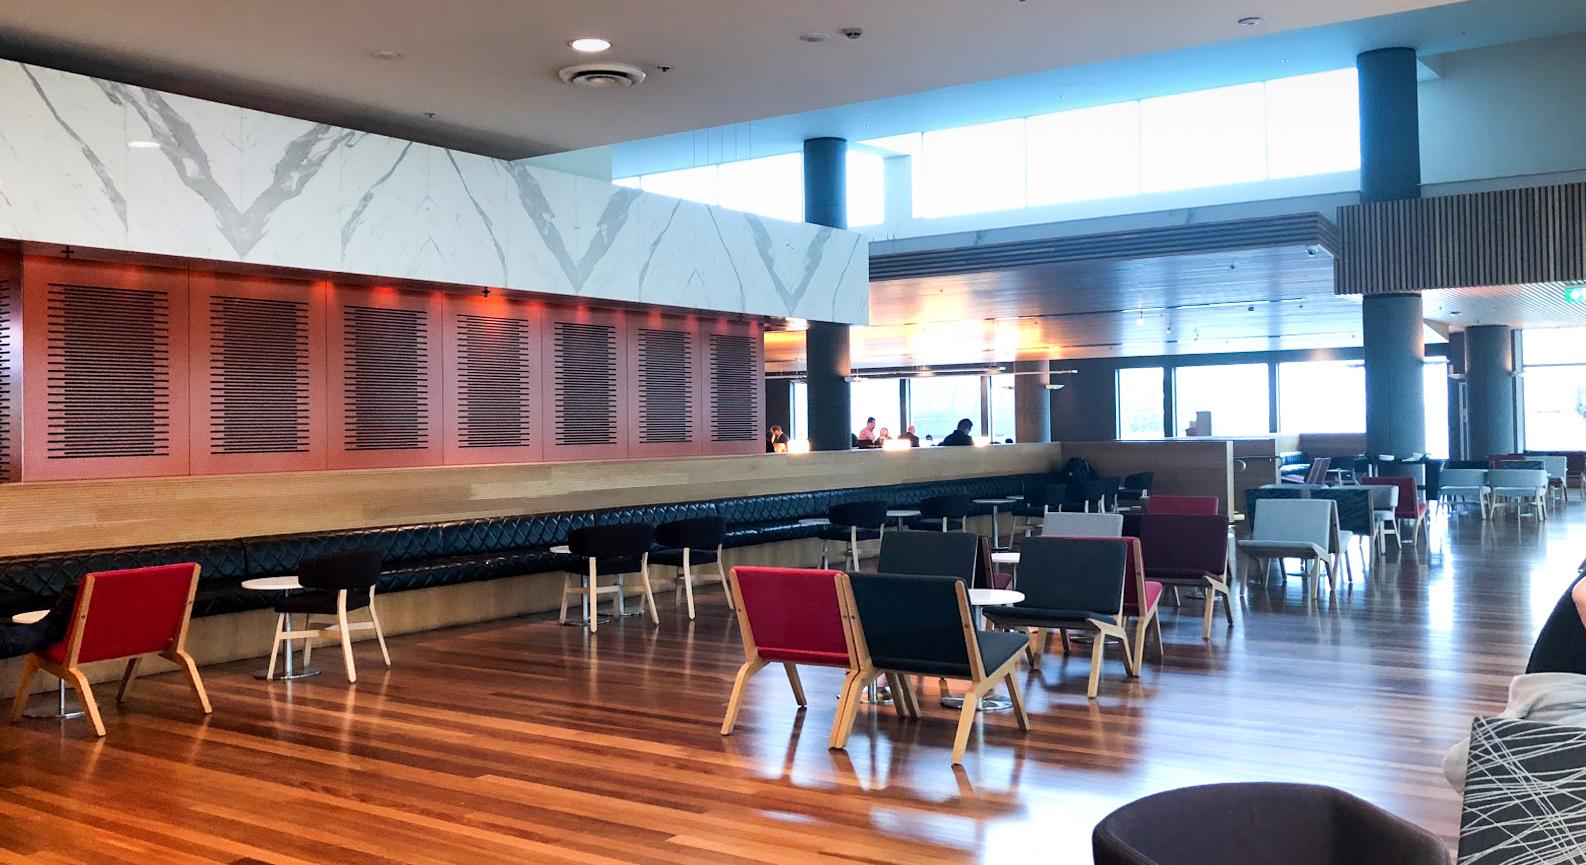 Qantas Club Sydney seating area